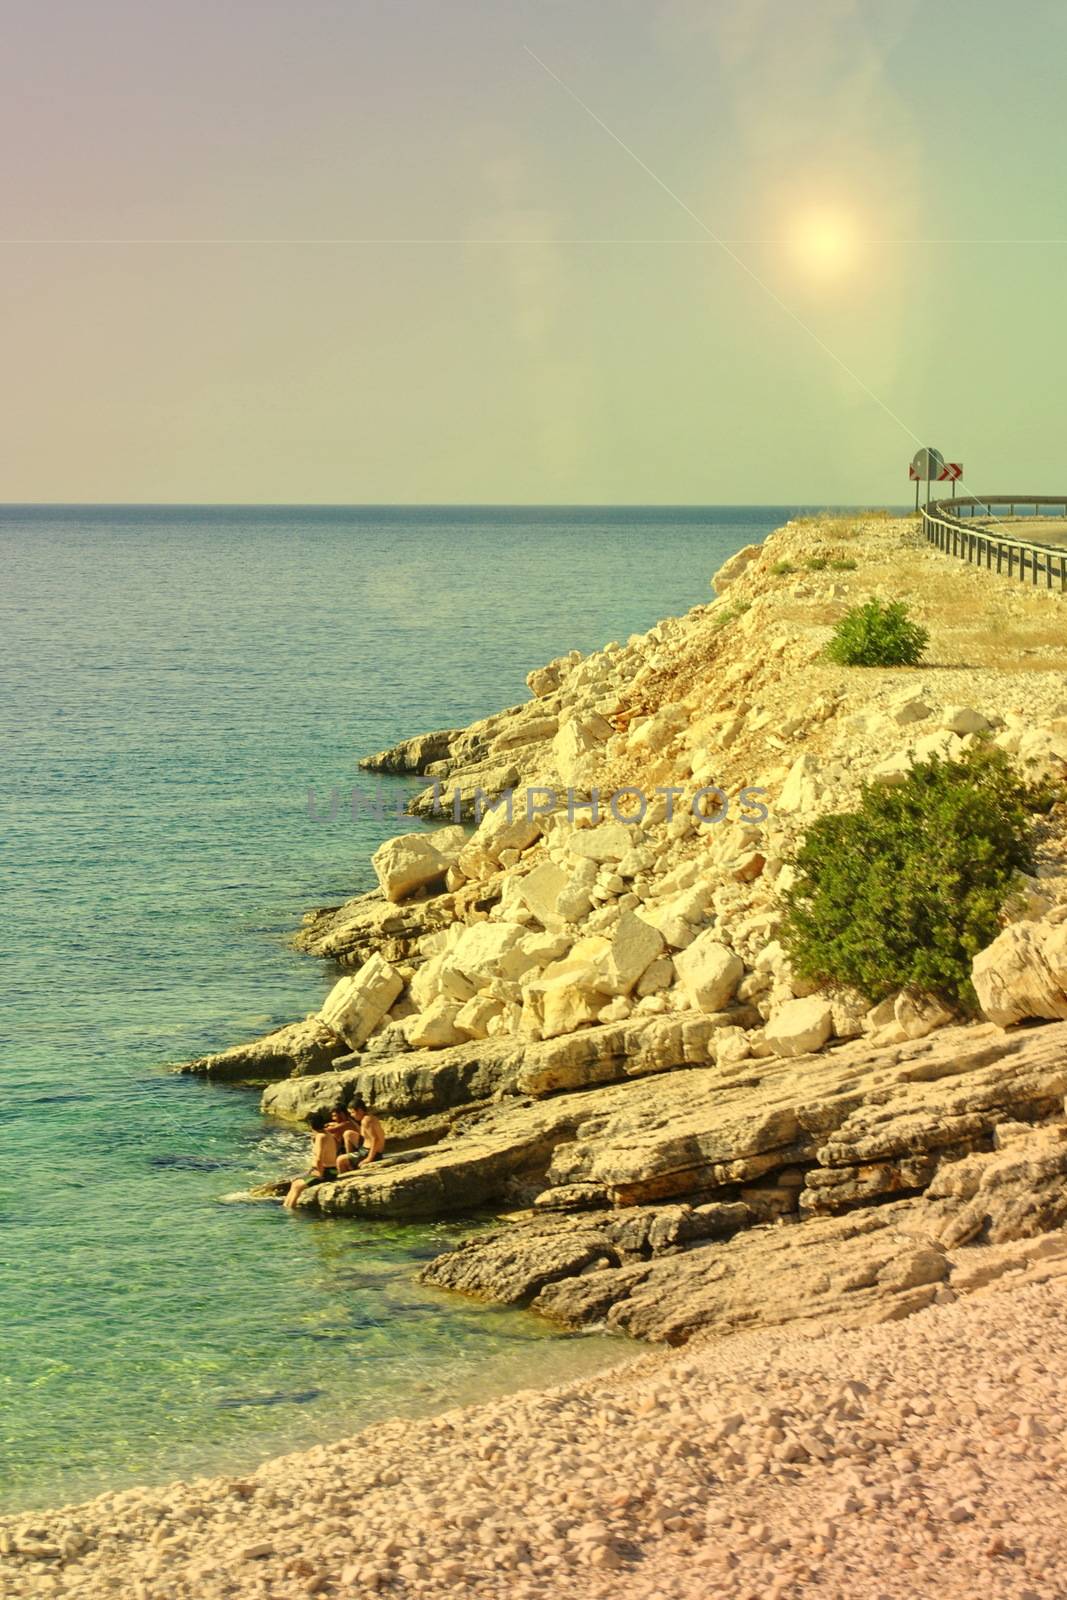 Rocky coast of the Mediterranean Sea in Turkey by DaVidich